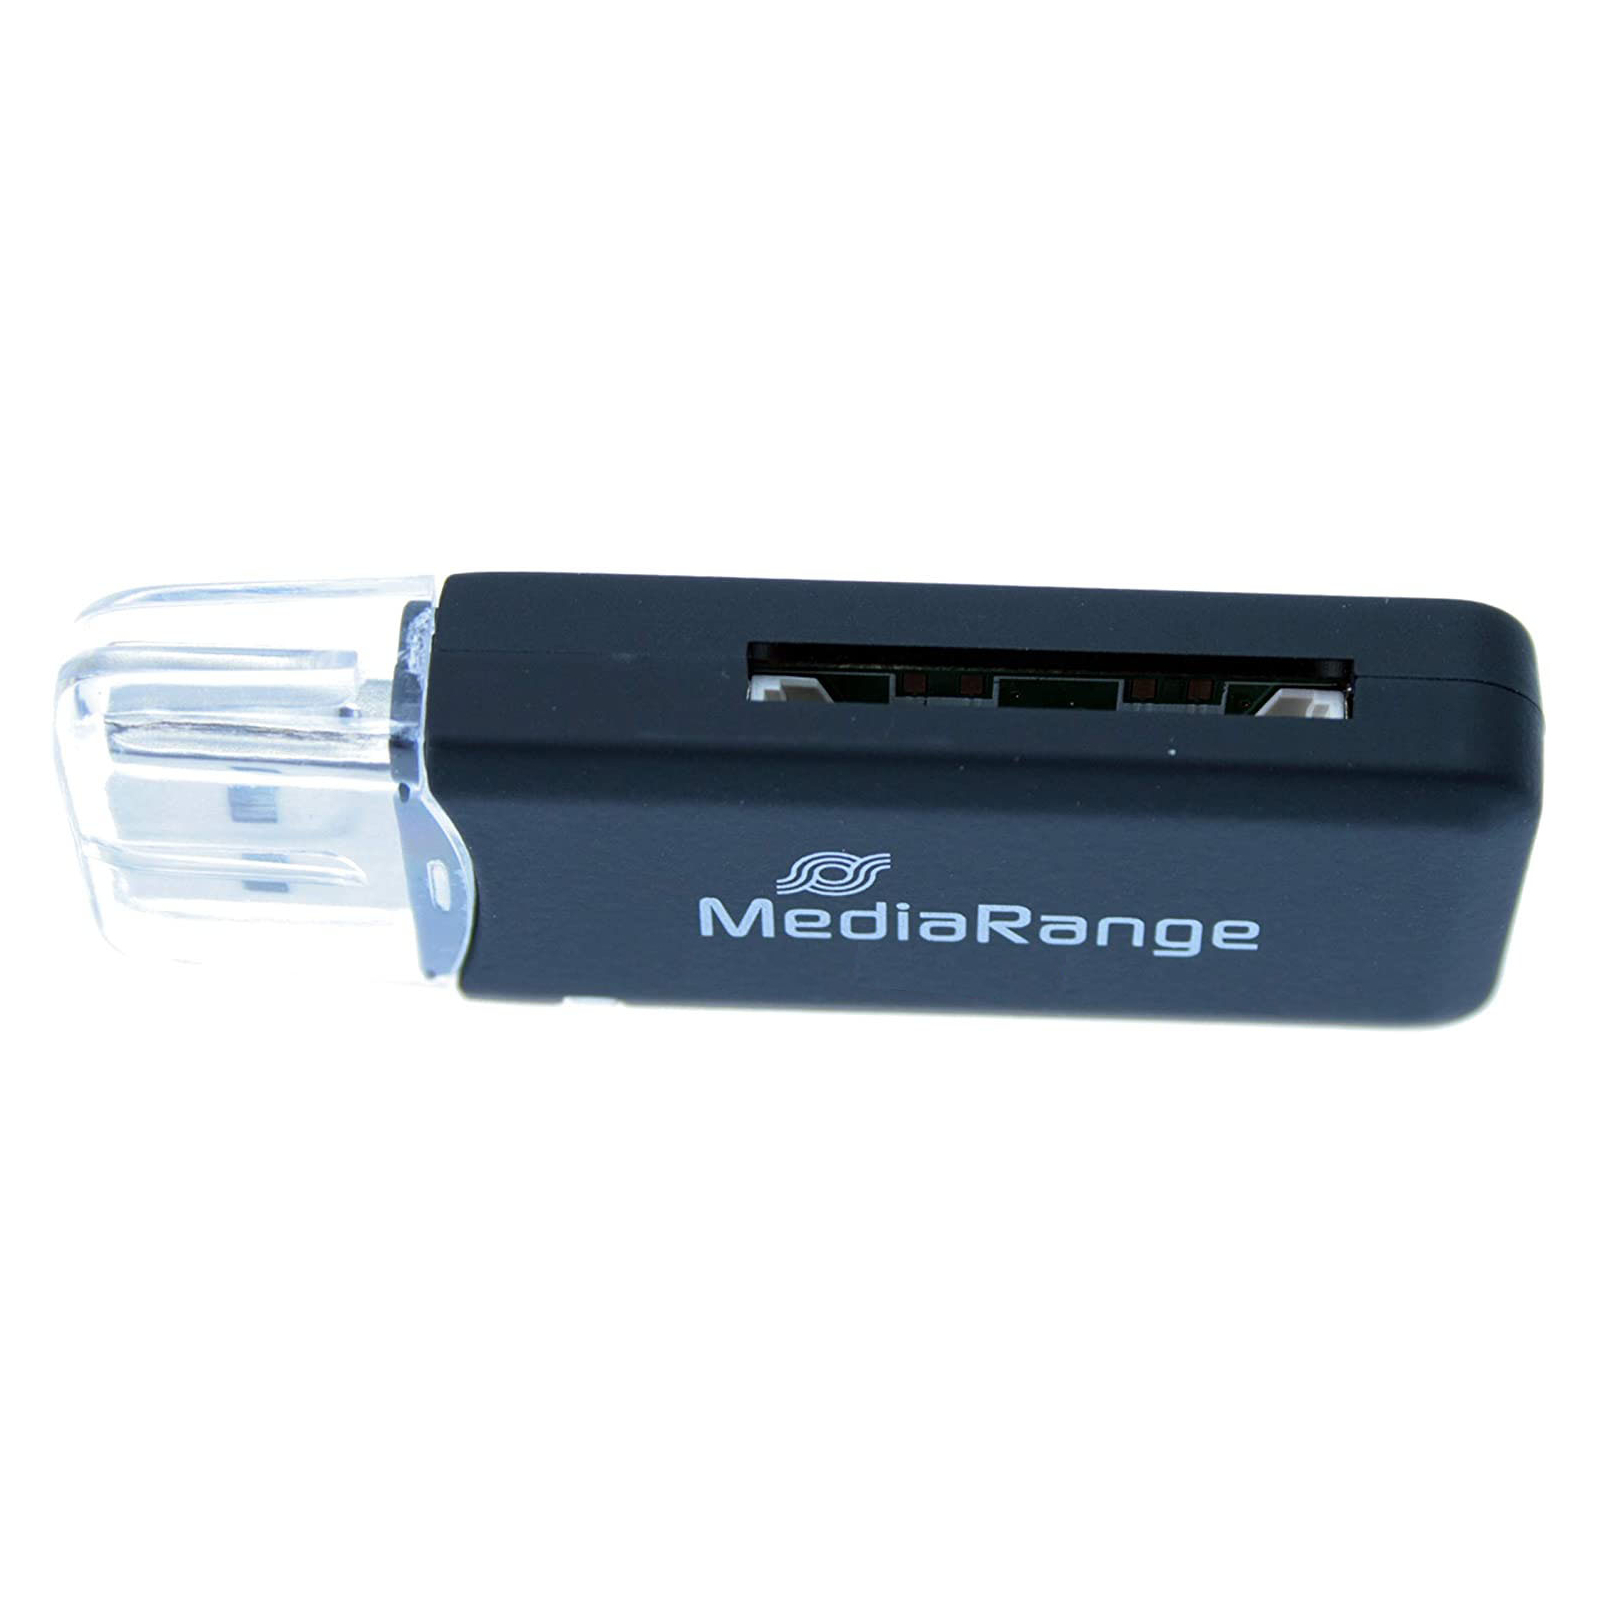 Считыватель флеш-карт Mediarange USB 2.0 black (MRCS506)